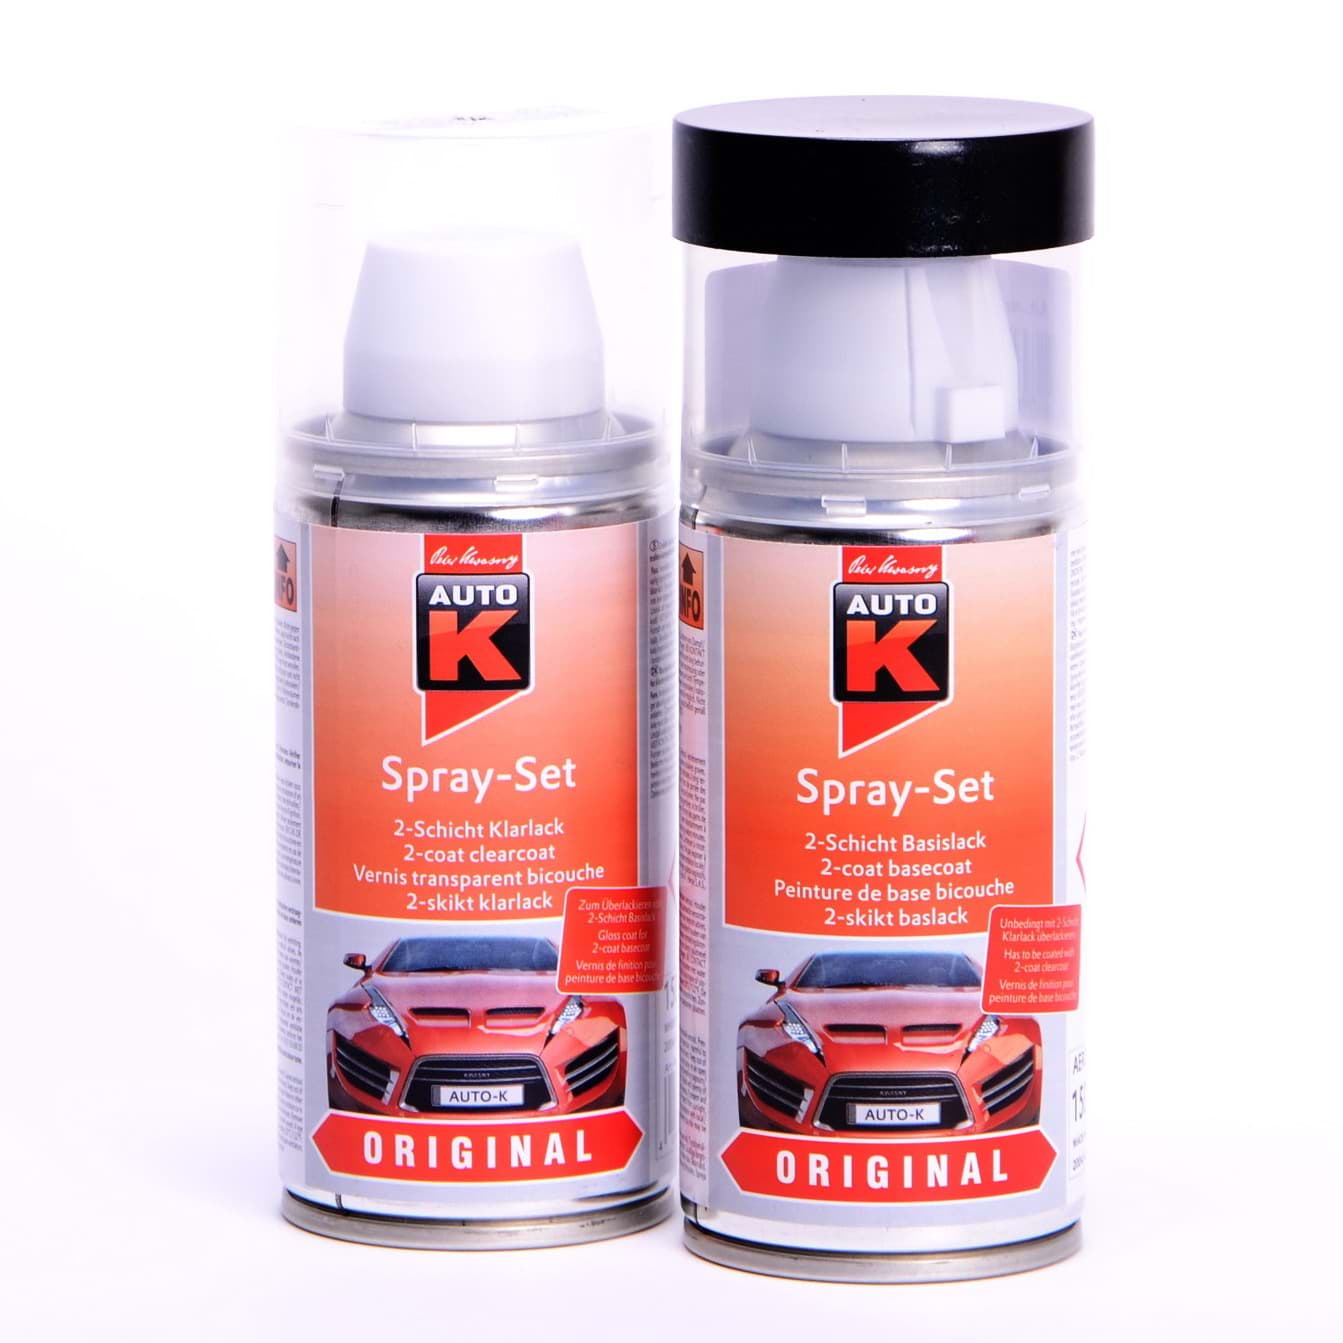 Afbeelding van Auto-K Spray-Set Autolack für Opel 547 Magmarot 21348